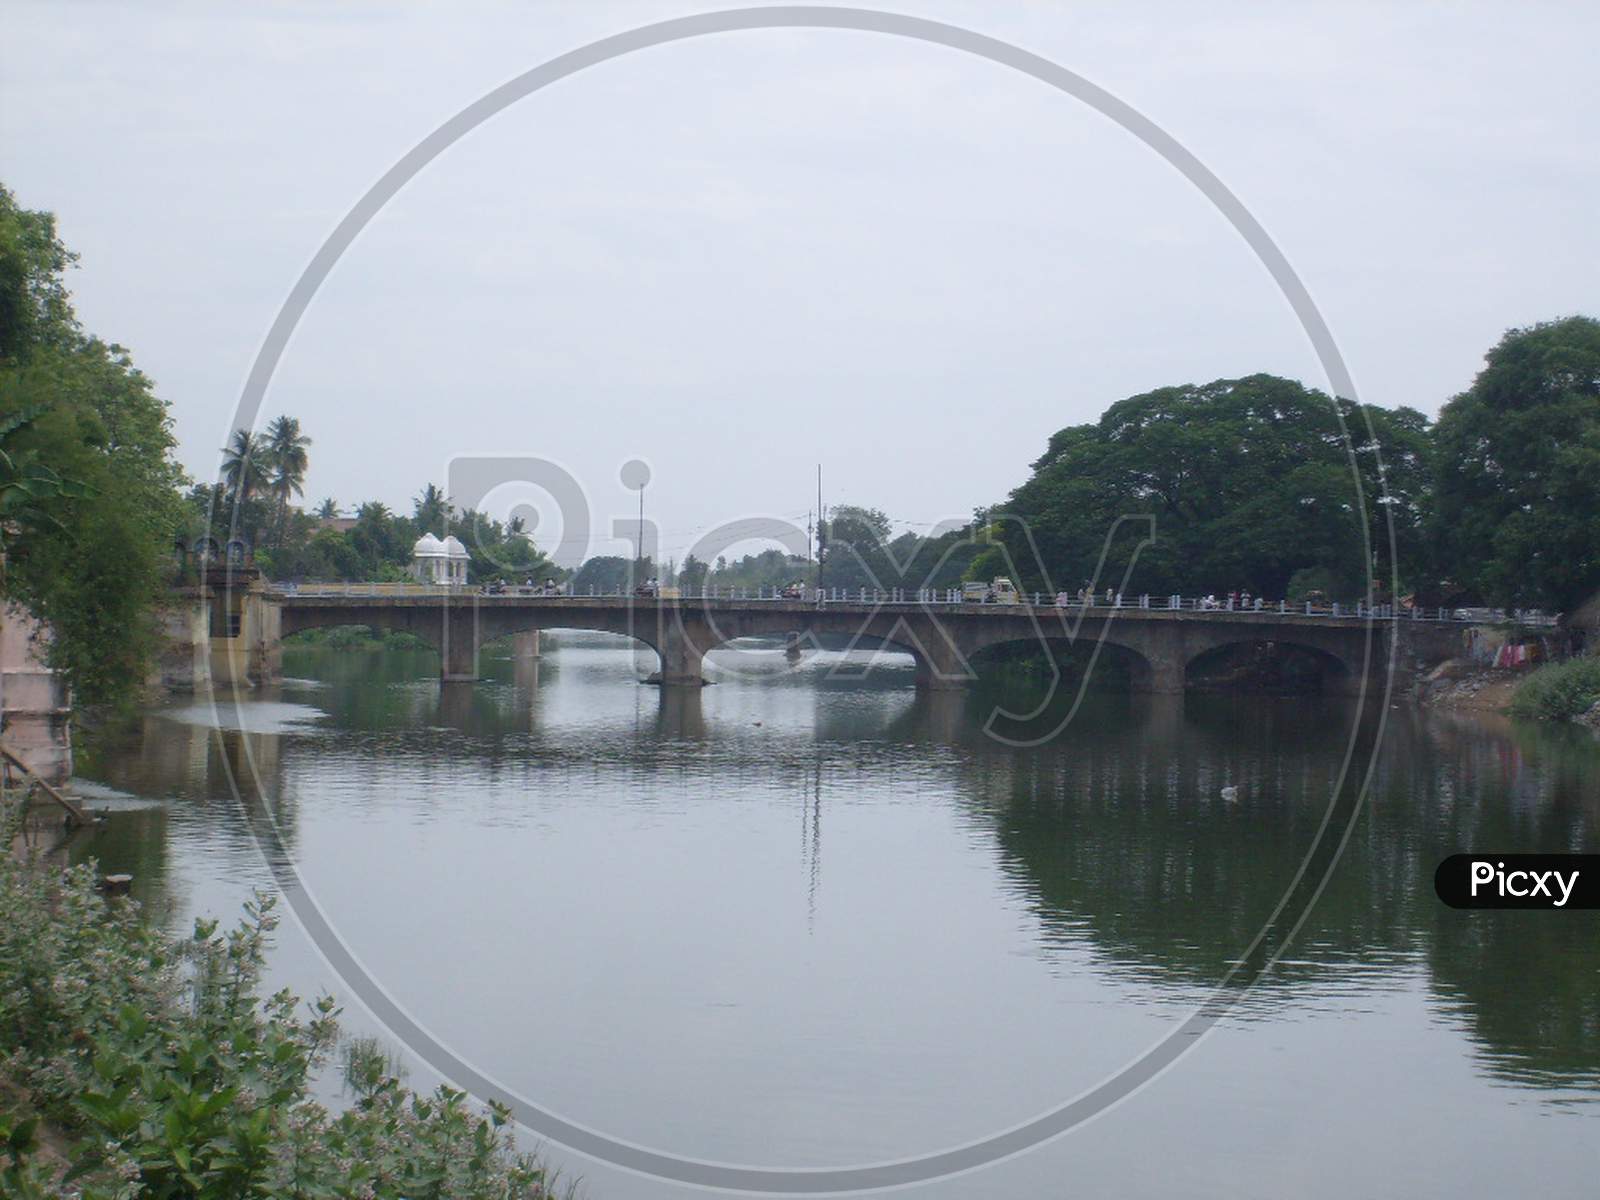 River Bridge